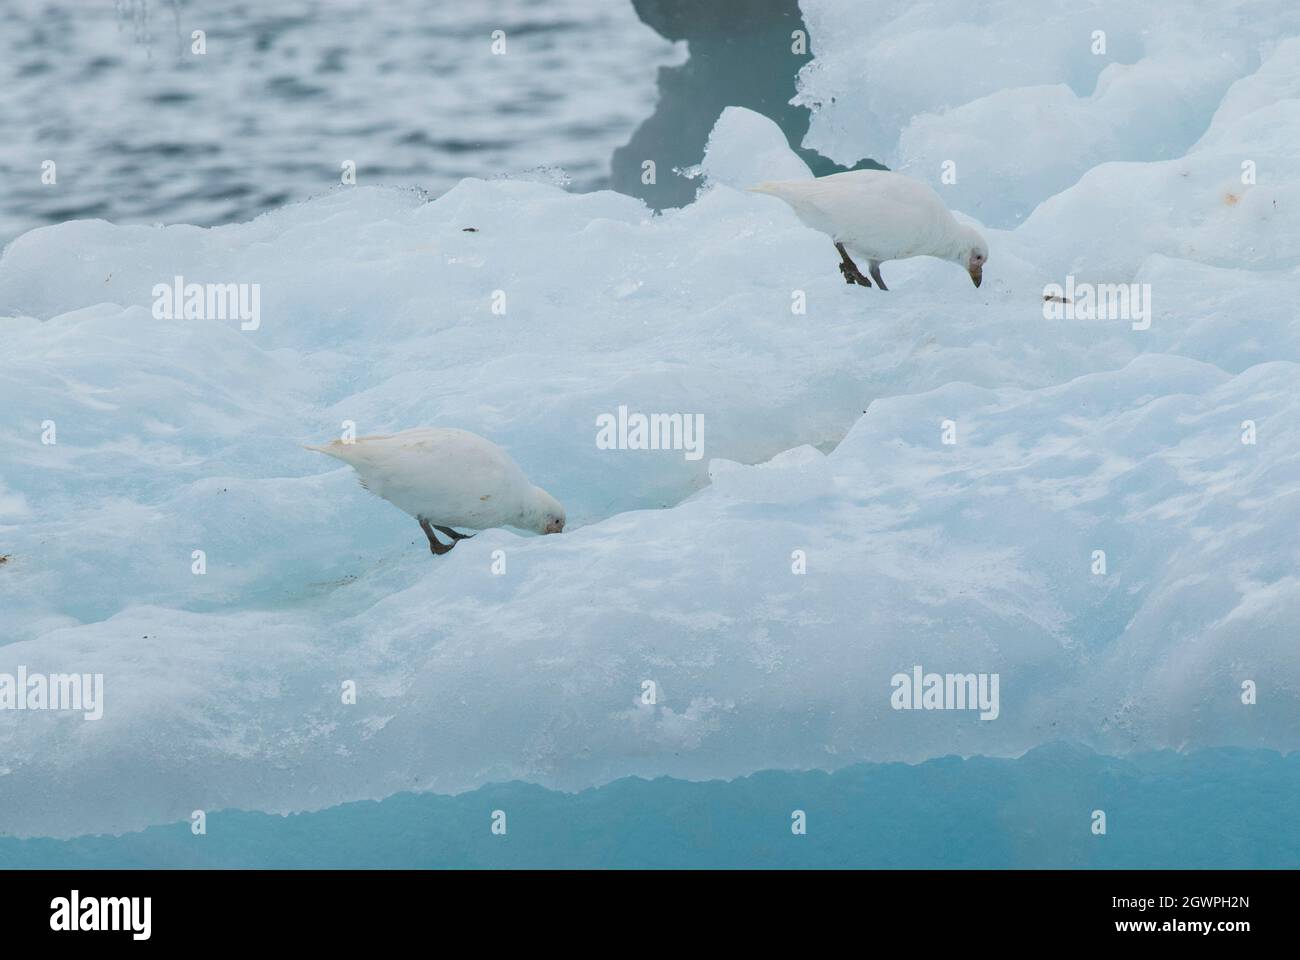 Snowy Sheathbill, Chionis albus, on ice, Antartica. Stock Photo